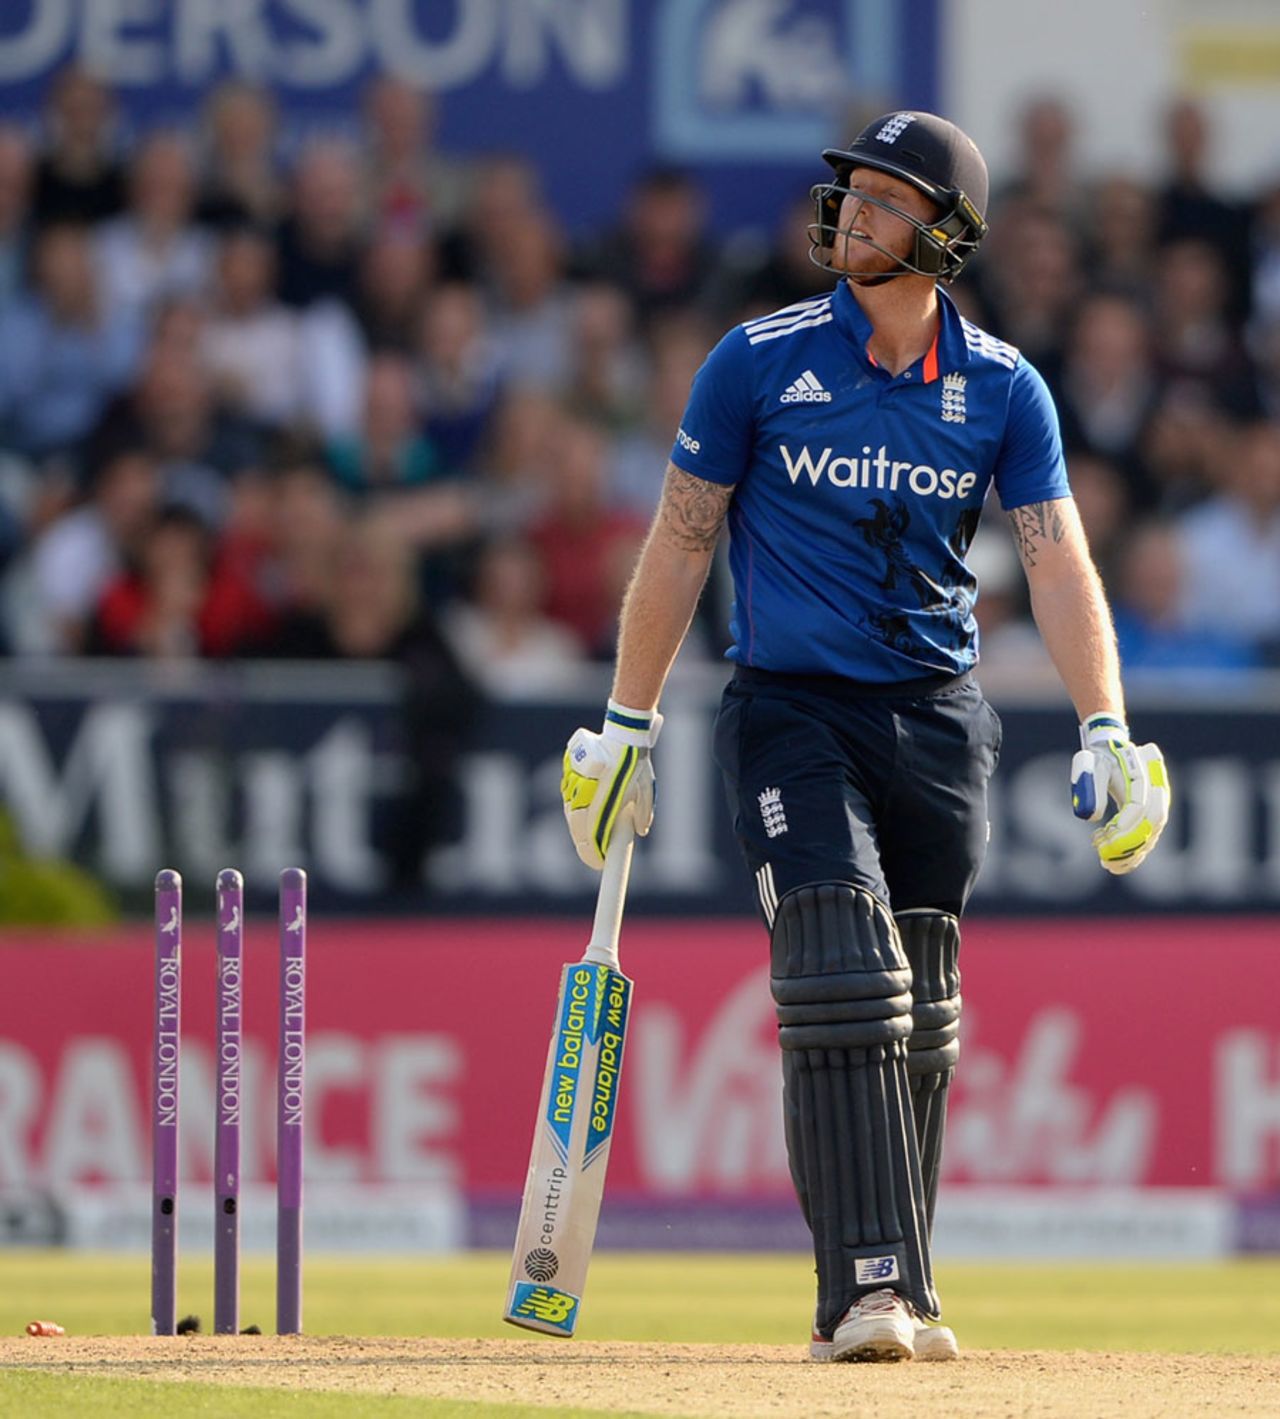 Ben Stokes was bowled for 41, England v Australia, 4th ODI, Headingley, September 11, 2015